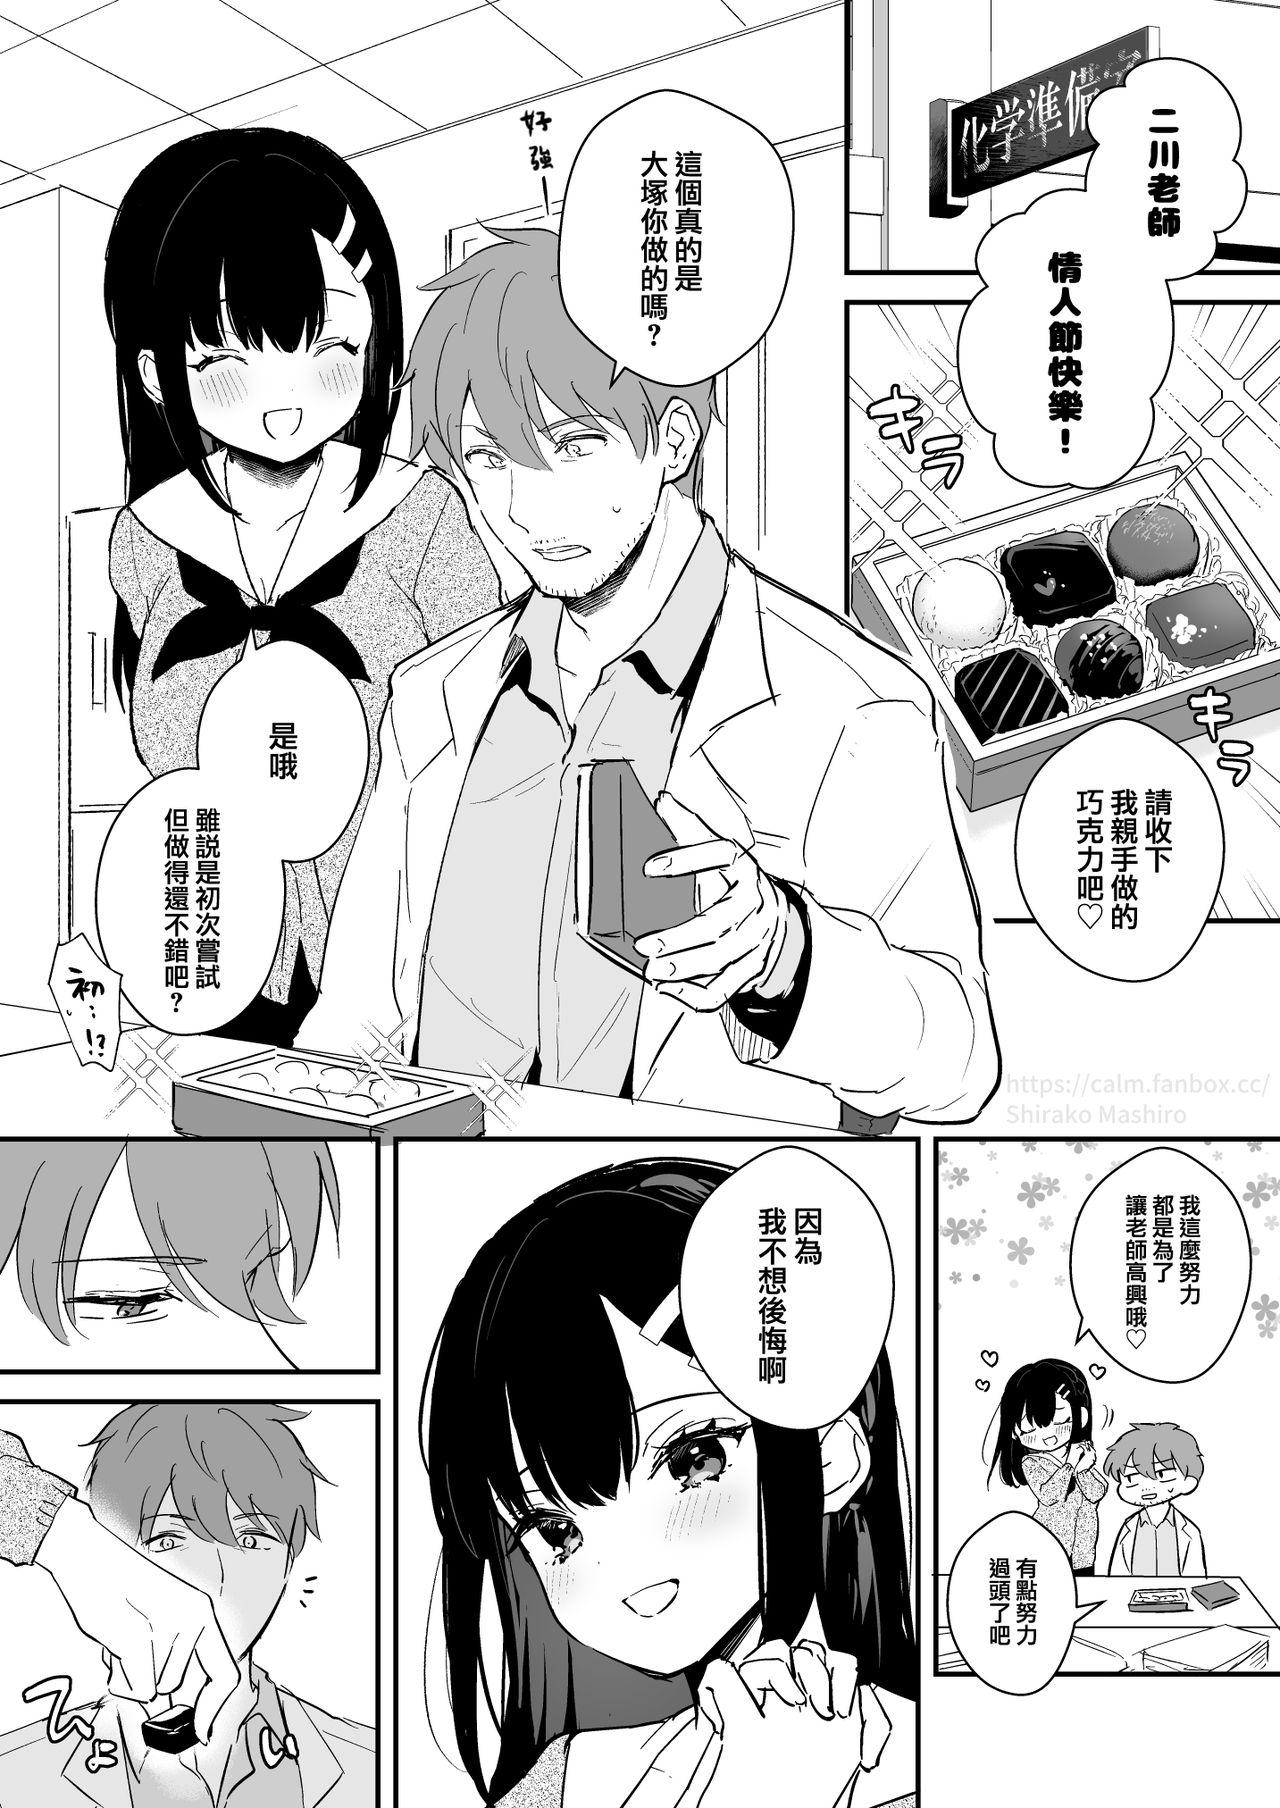 Smooth JK Miyako no Valentine Manga Pete - Page 2